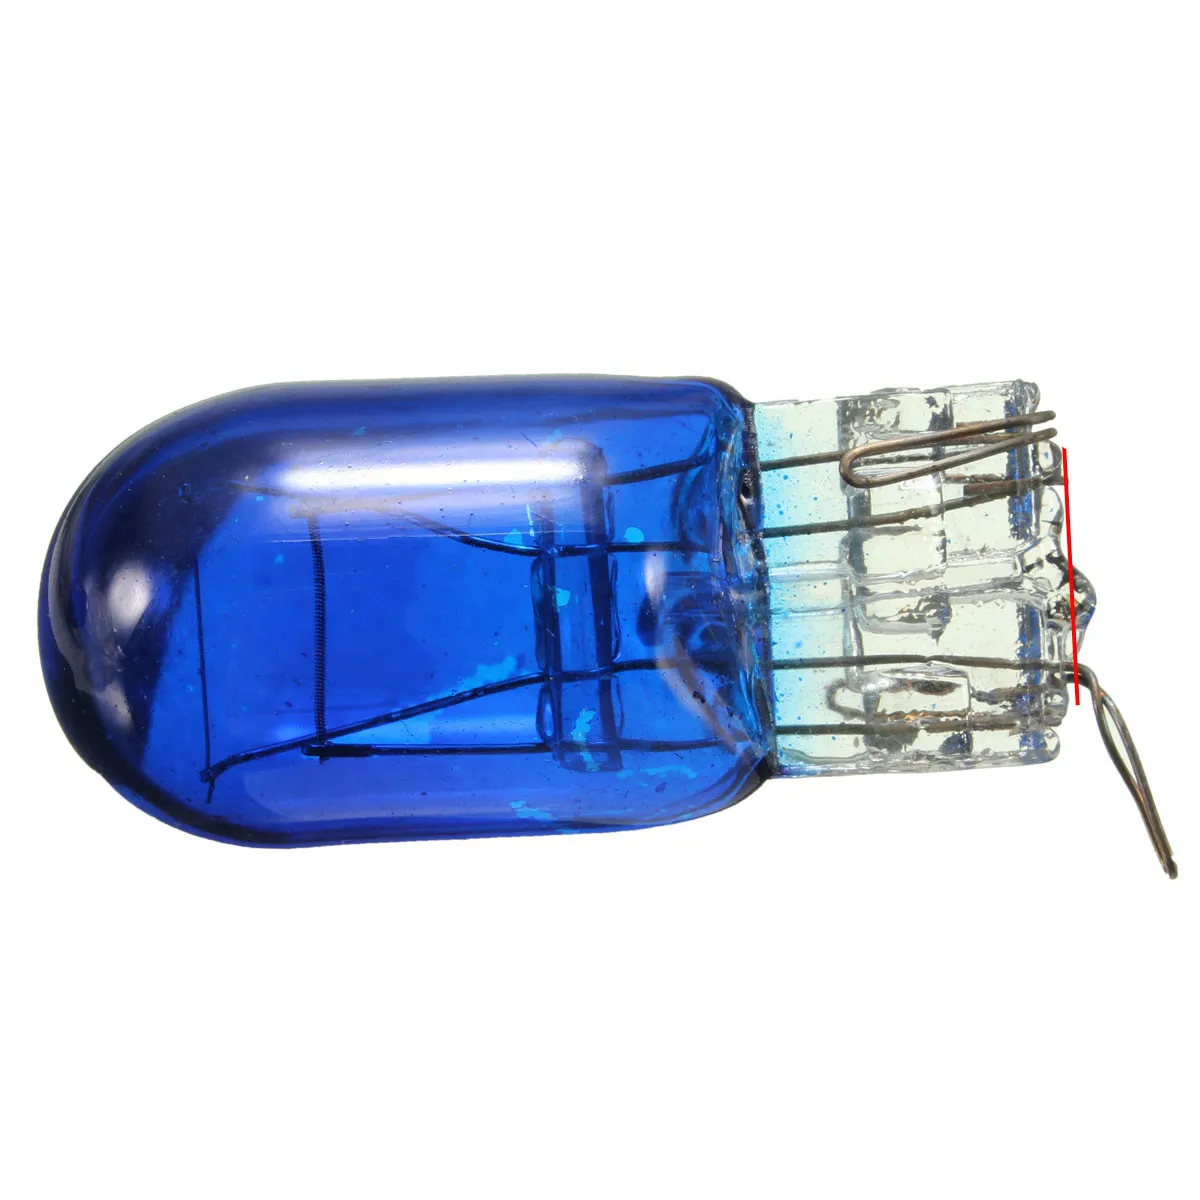 2x T20 7440 7443 1891 Blue Glass Car Halogen Lamp 12V W21/5W brake bulbs Tail Light Stop Light Rear Turn Signal DRL Wedge Base